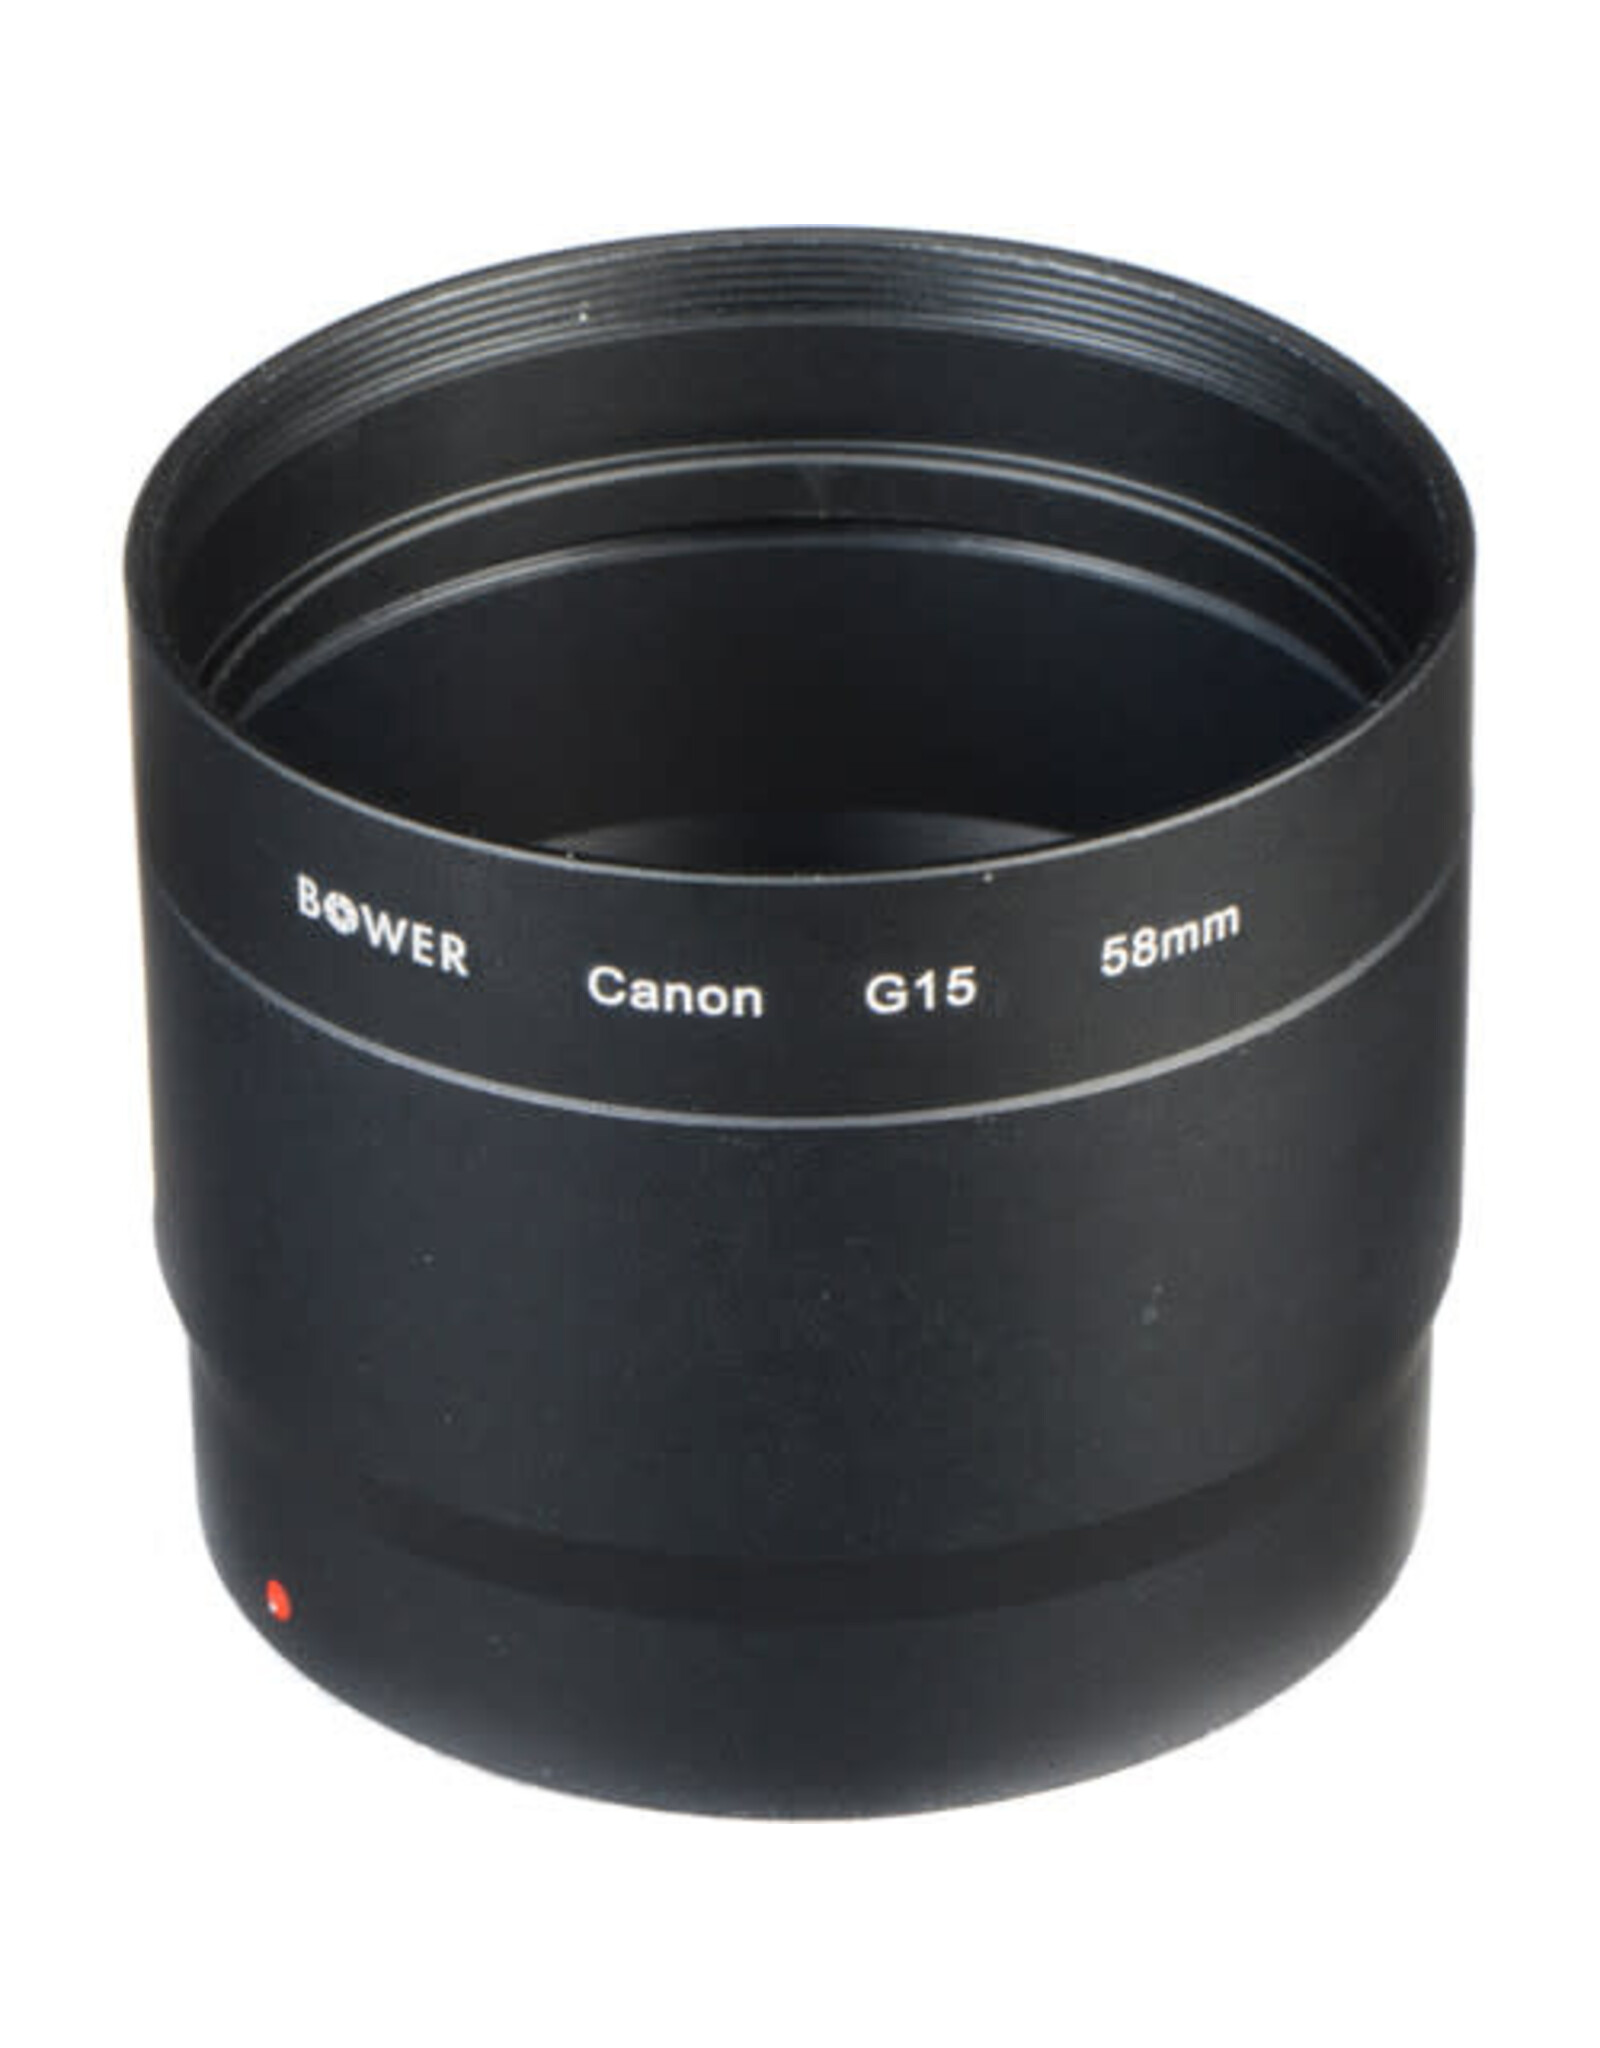 Bower Adapter Tube for Canon G15 & G16 Digital Cameras - 58mm